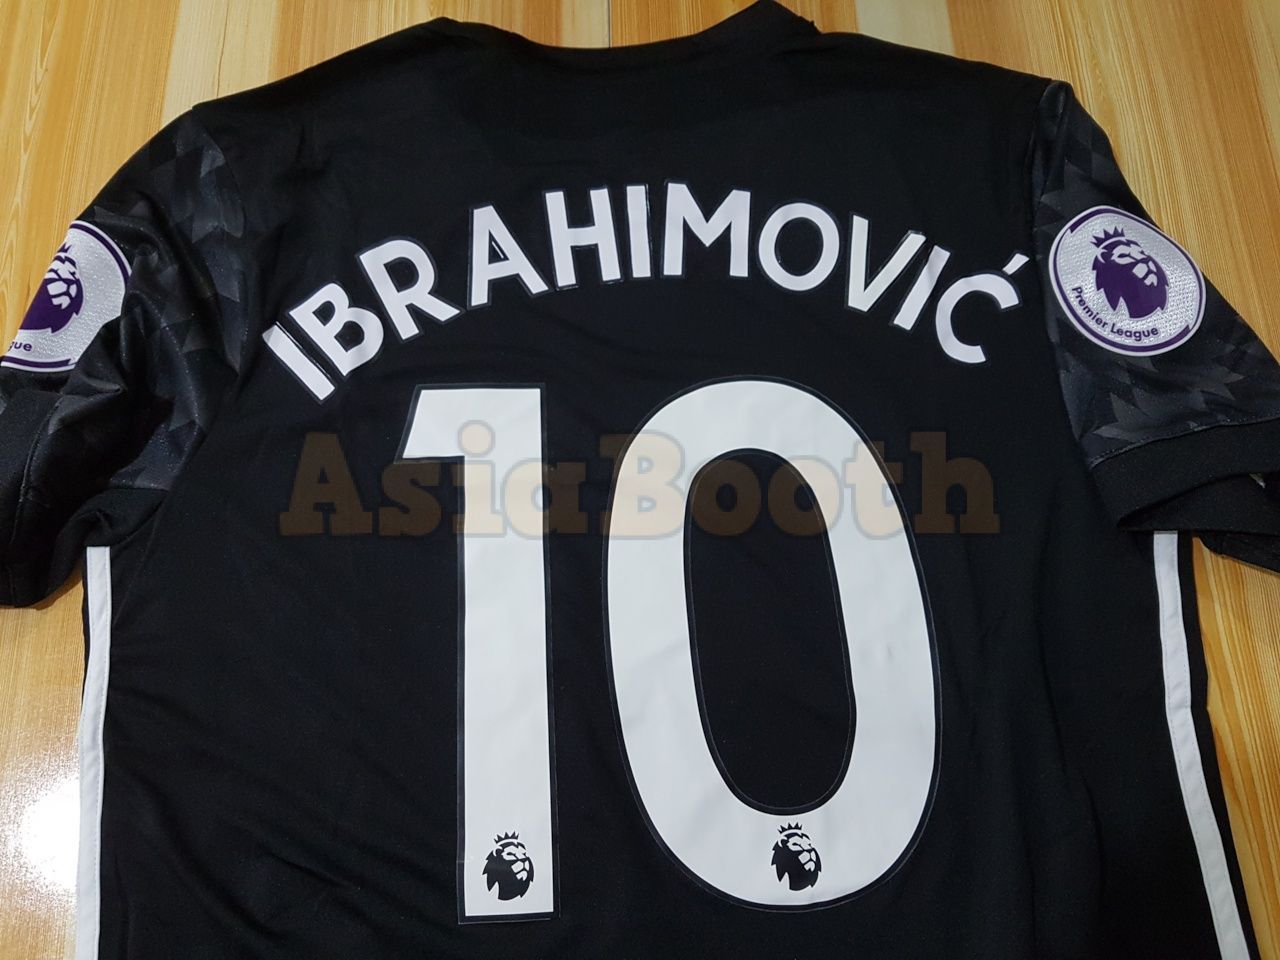 ibrahimovic jersey number